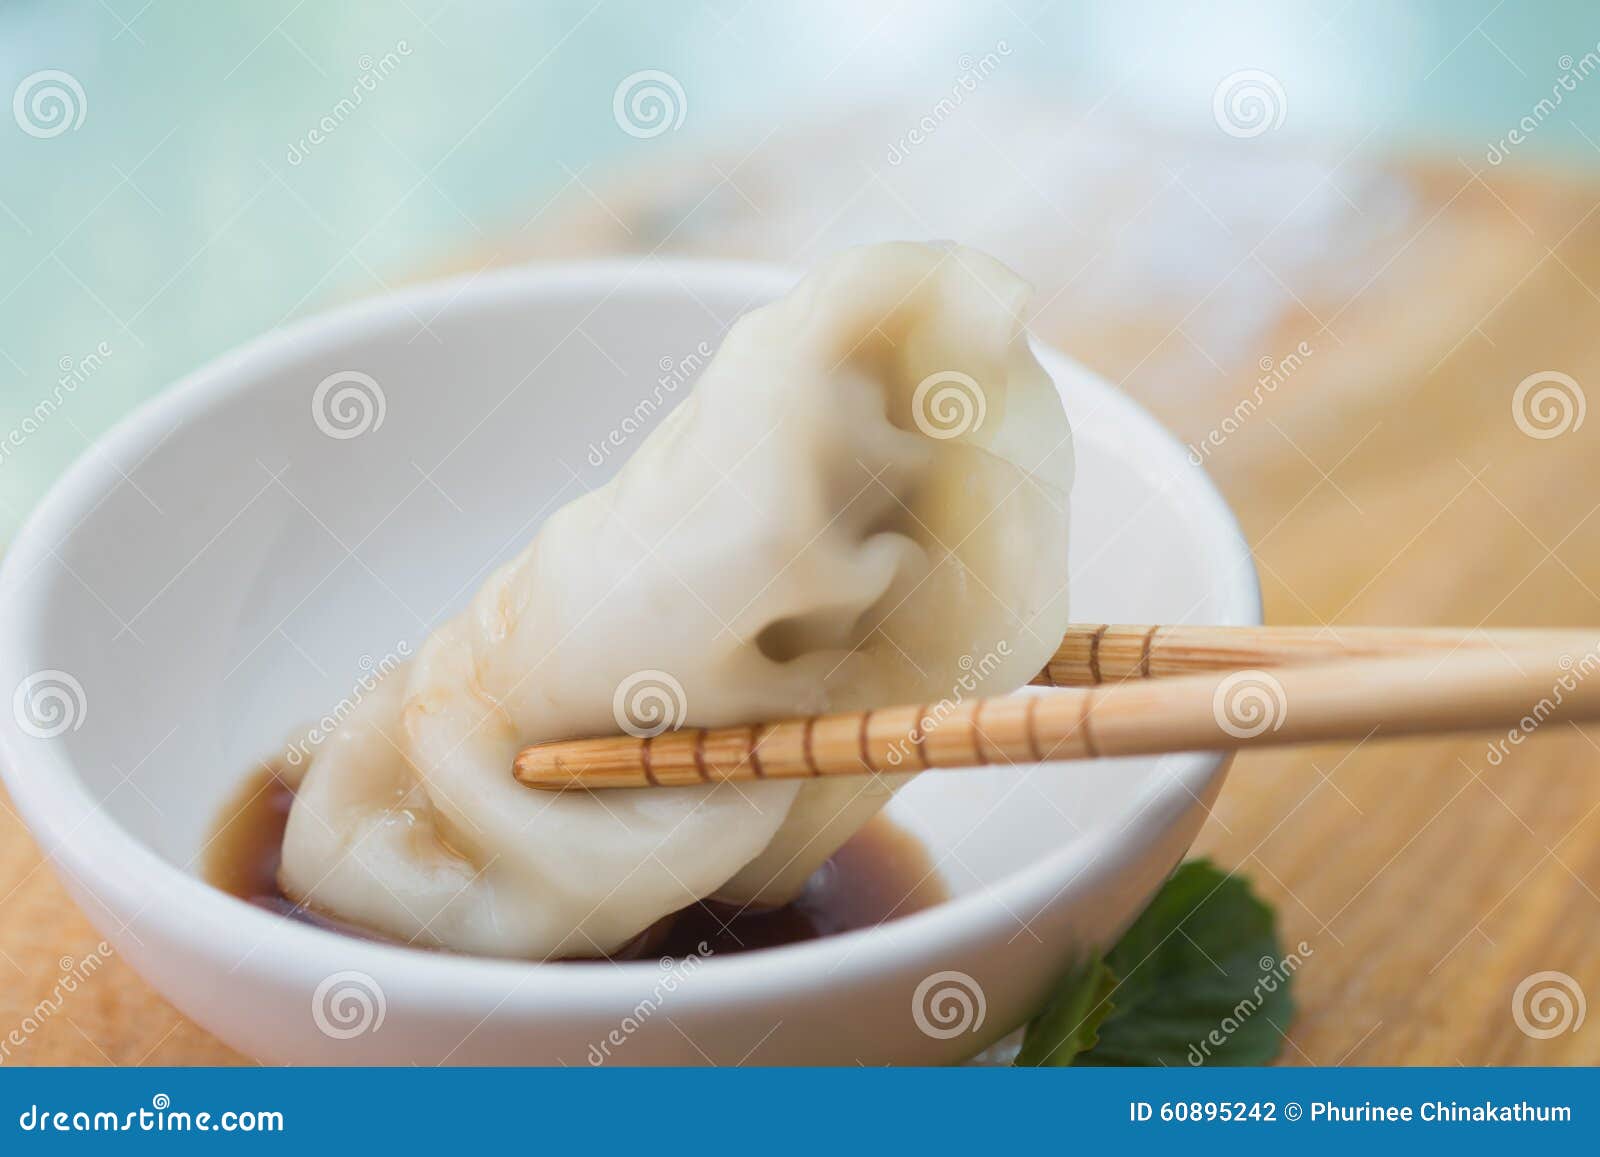 chinese dumplings or jiaozi with chopstick